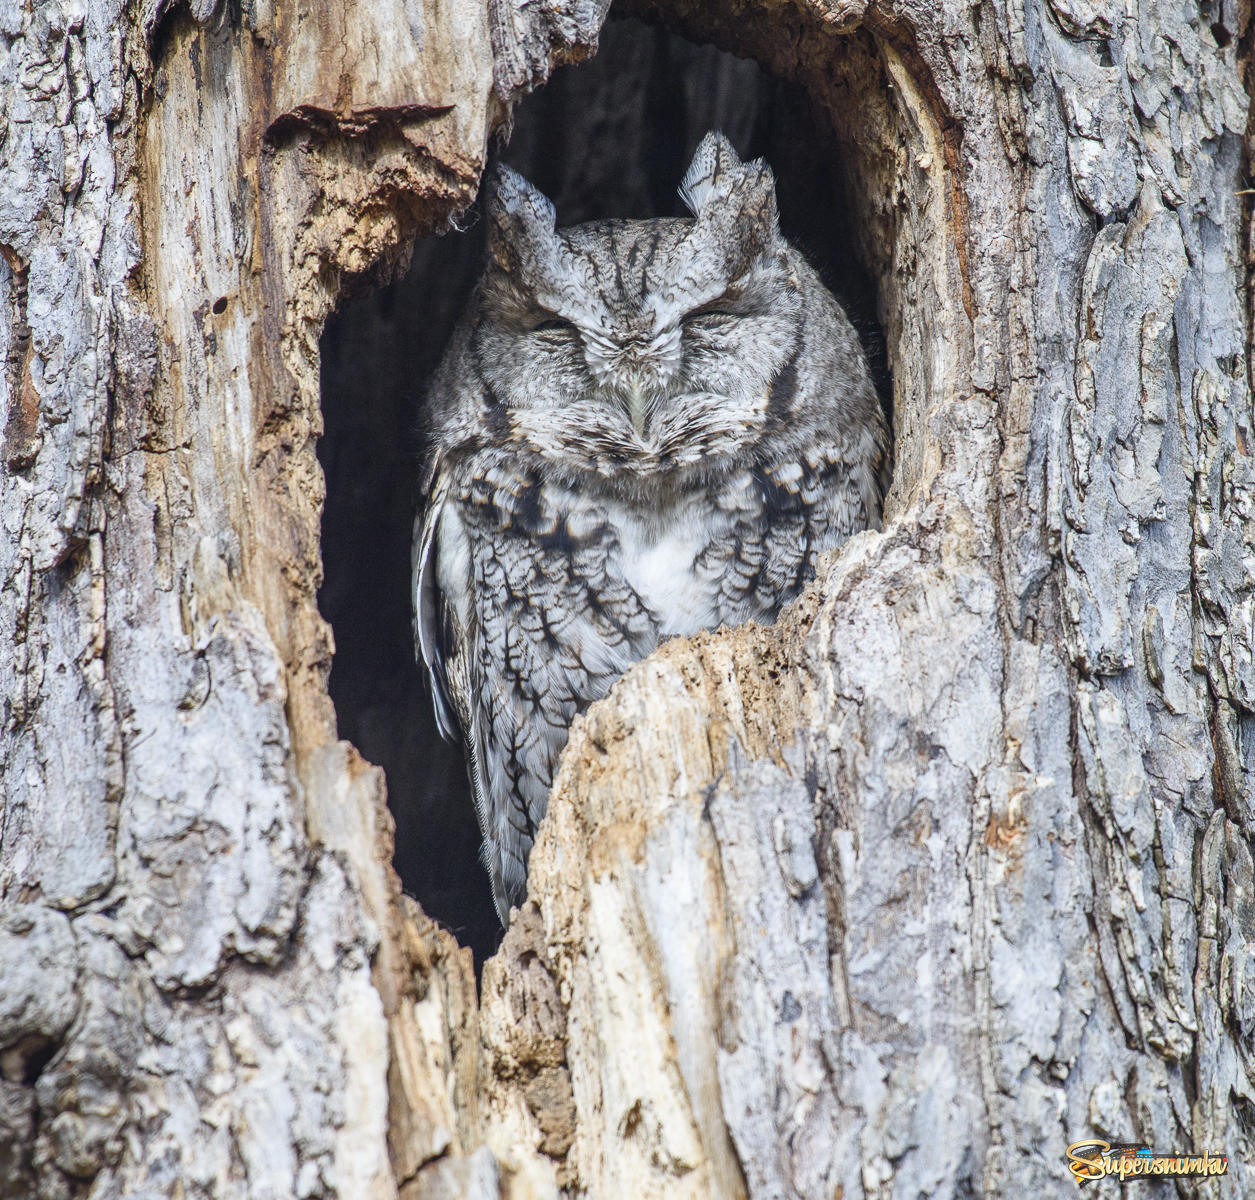  Eastern Screech Owl (grey morph) in Canada